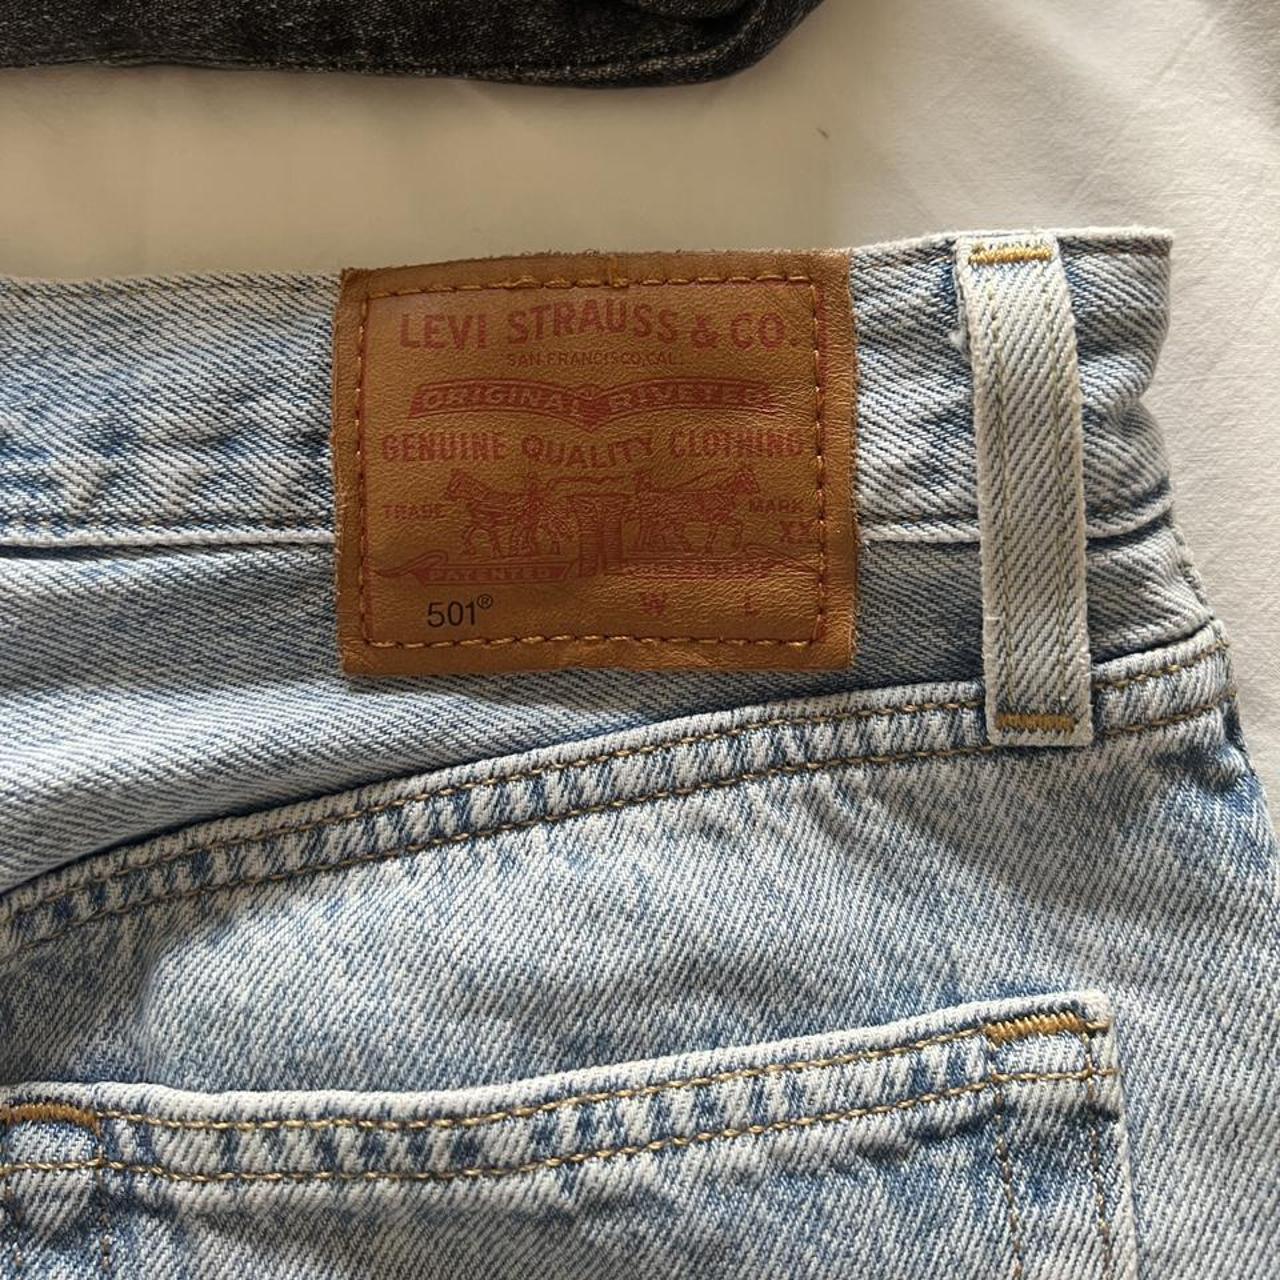 501 levi jeans w23 l26. Good condition, worn a few... - Depop